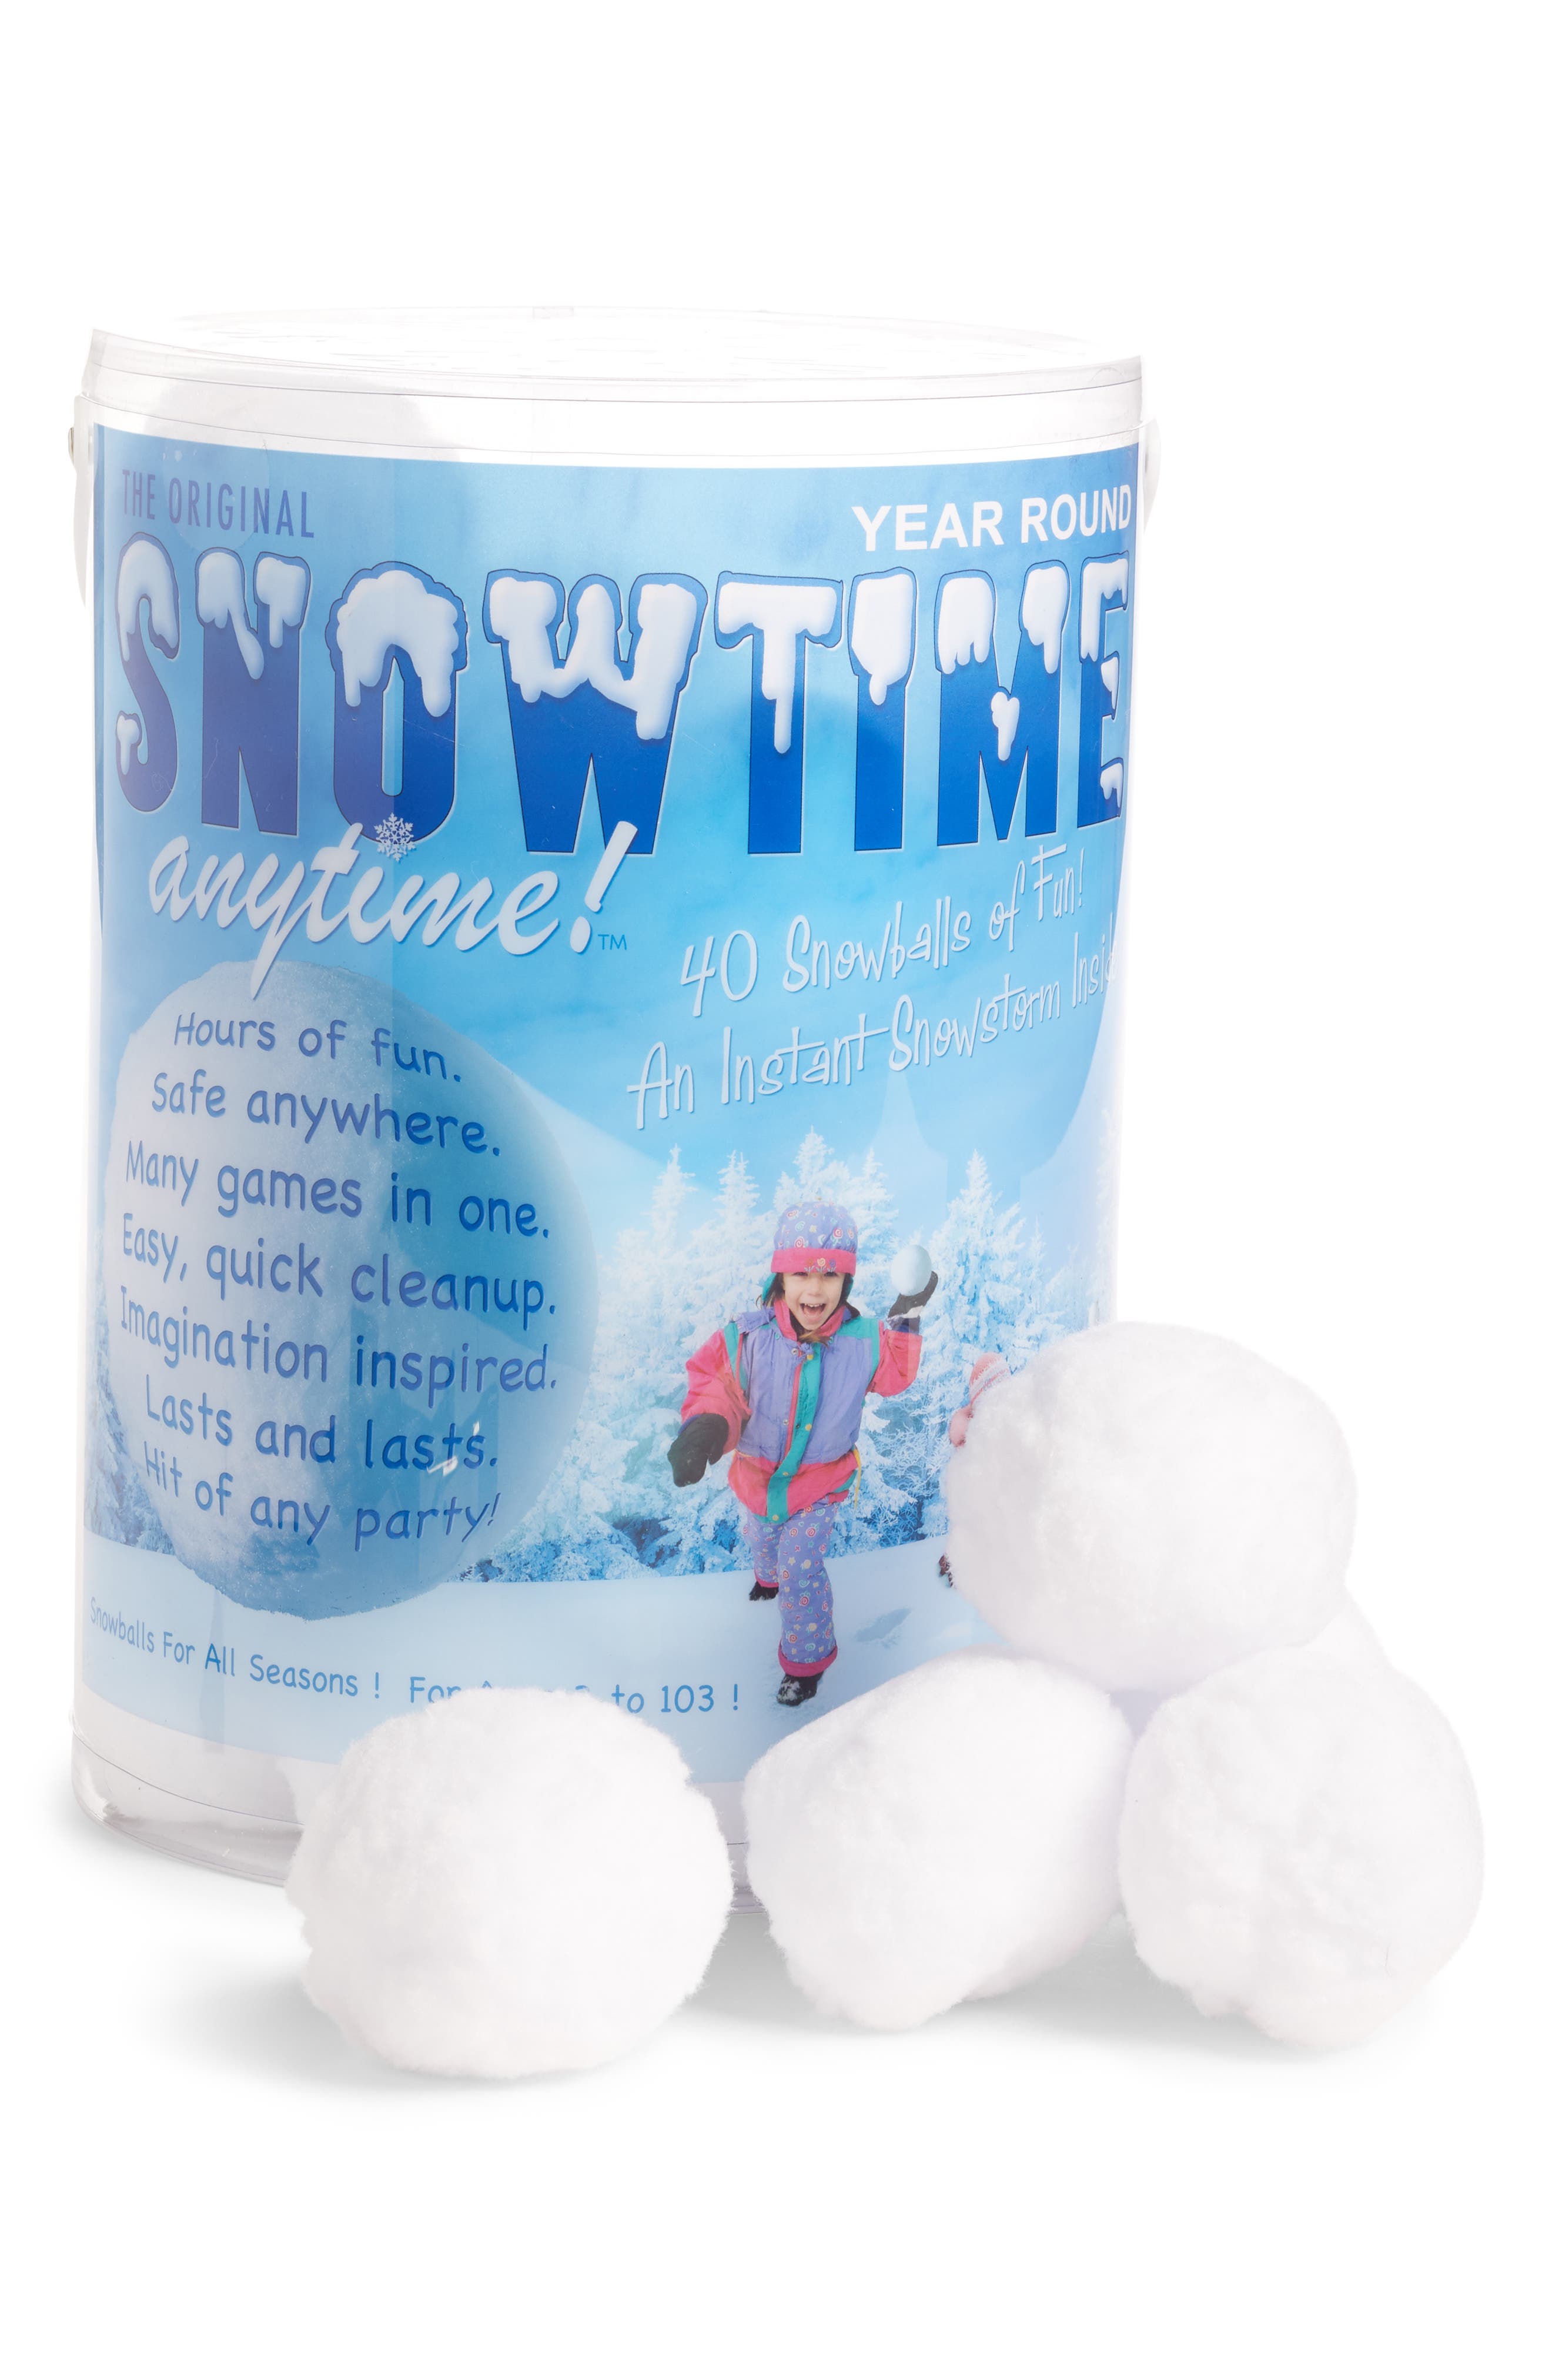 Zelte Strandmuscheln Indoor Snowball Fight Snowtime Anytime 40 Pk Fazendaguimaraes Com Br